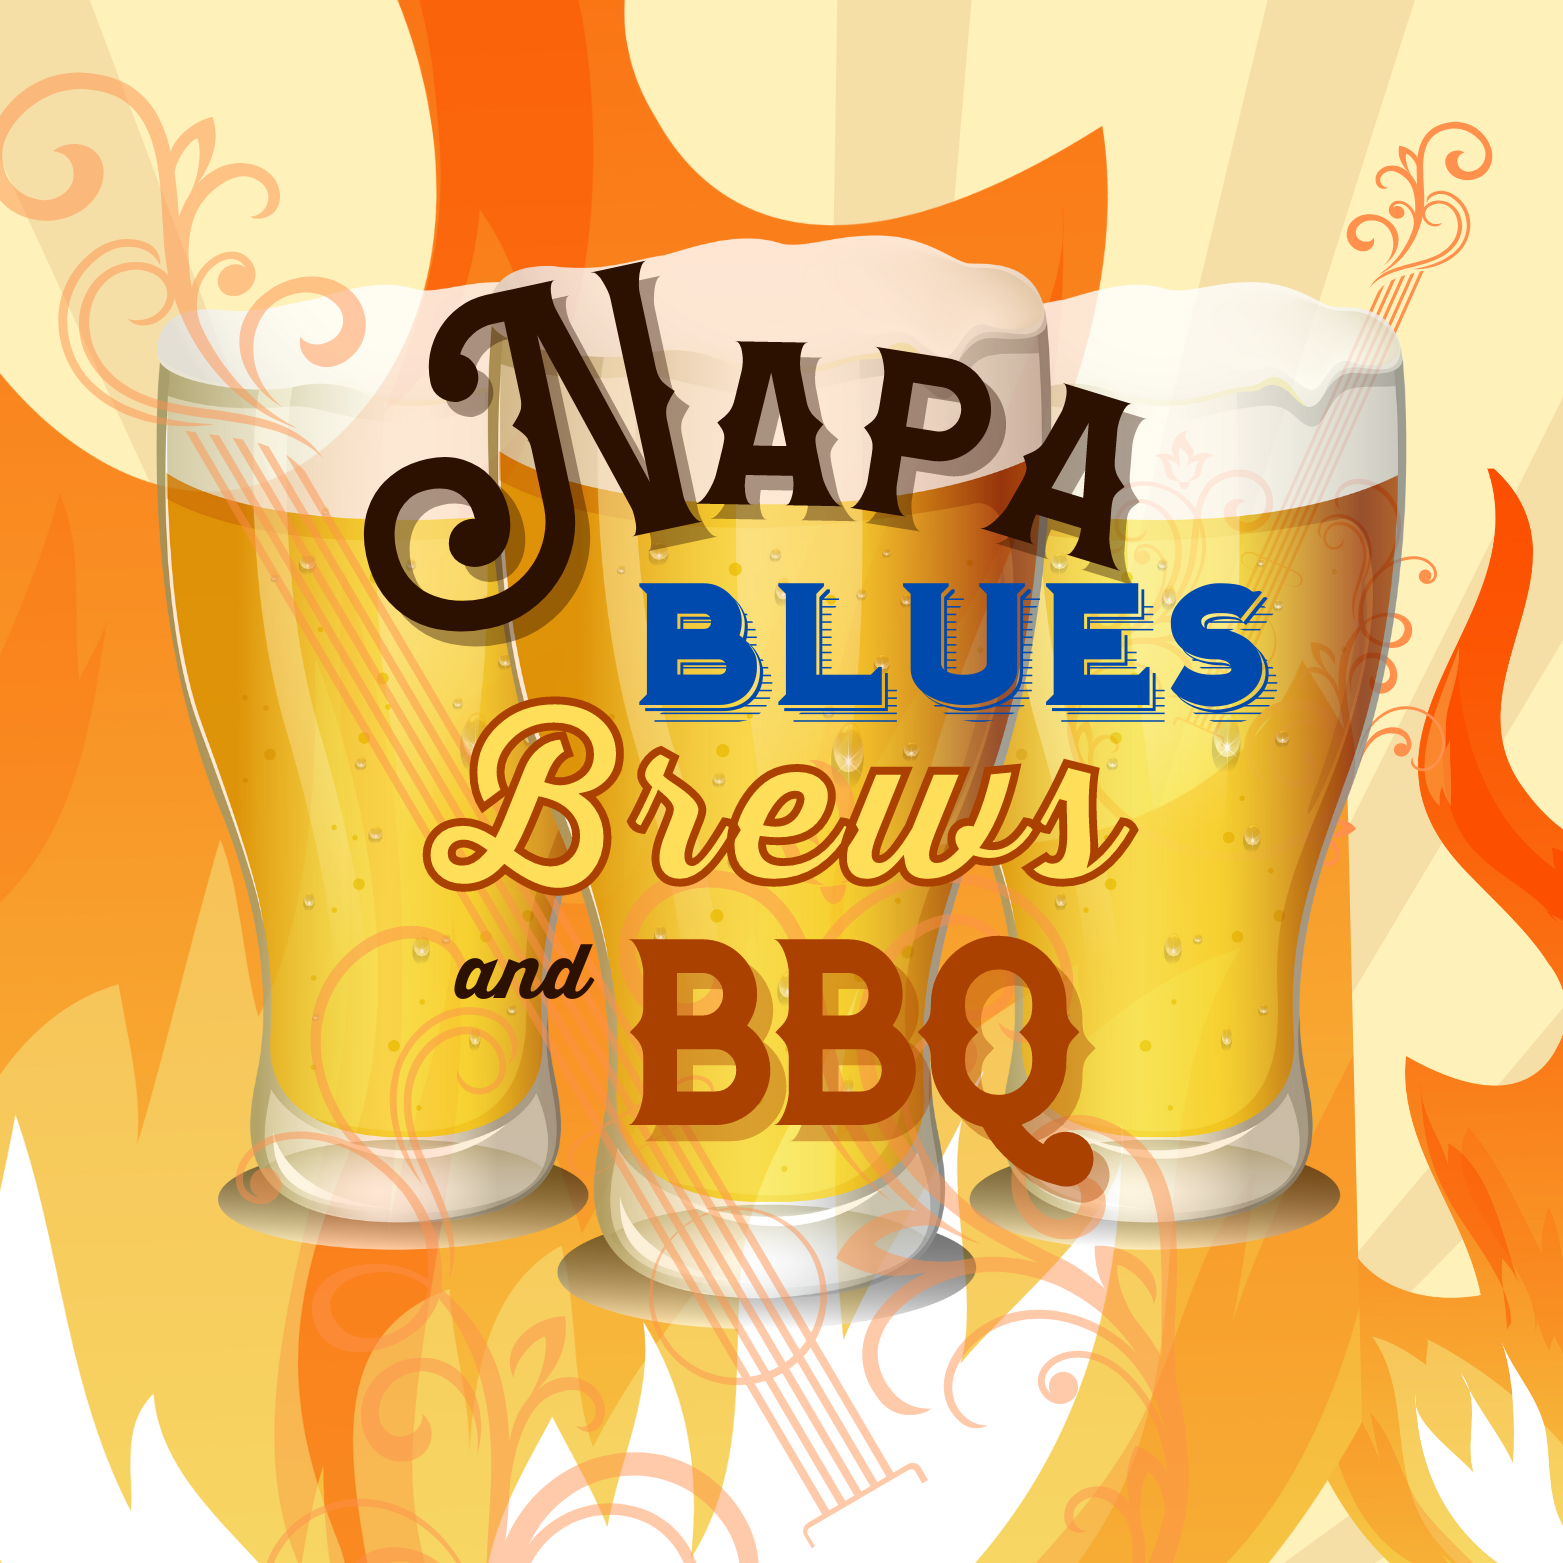 Beer Garden Napa Blues, Brews & BBQ